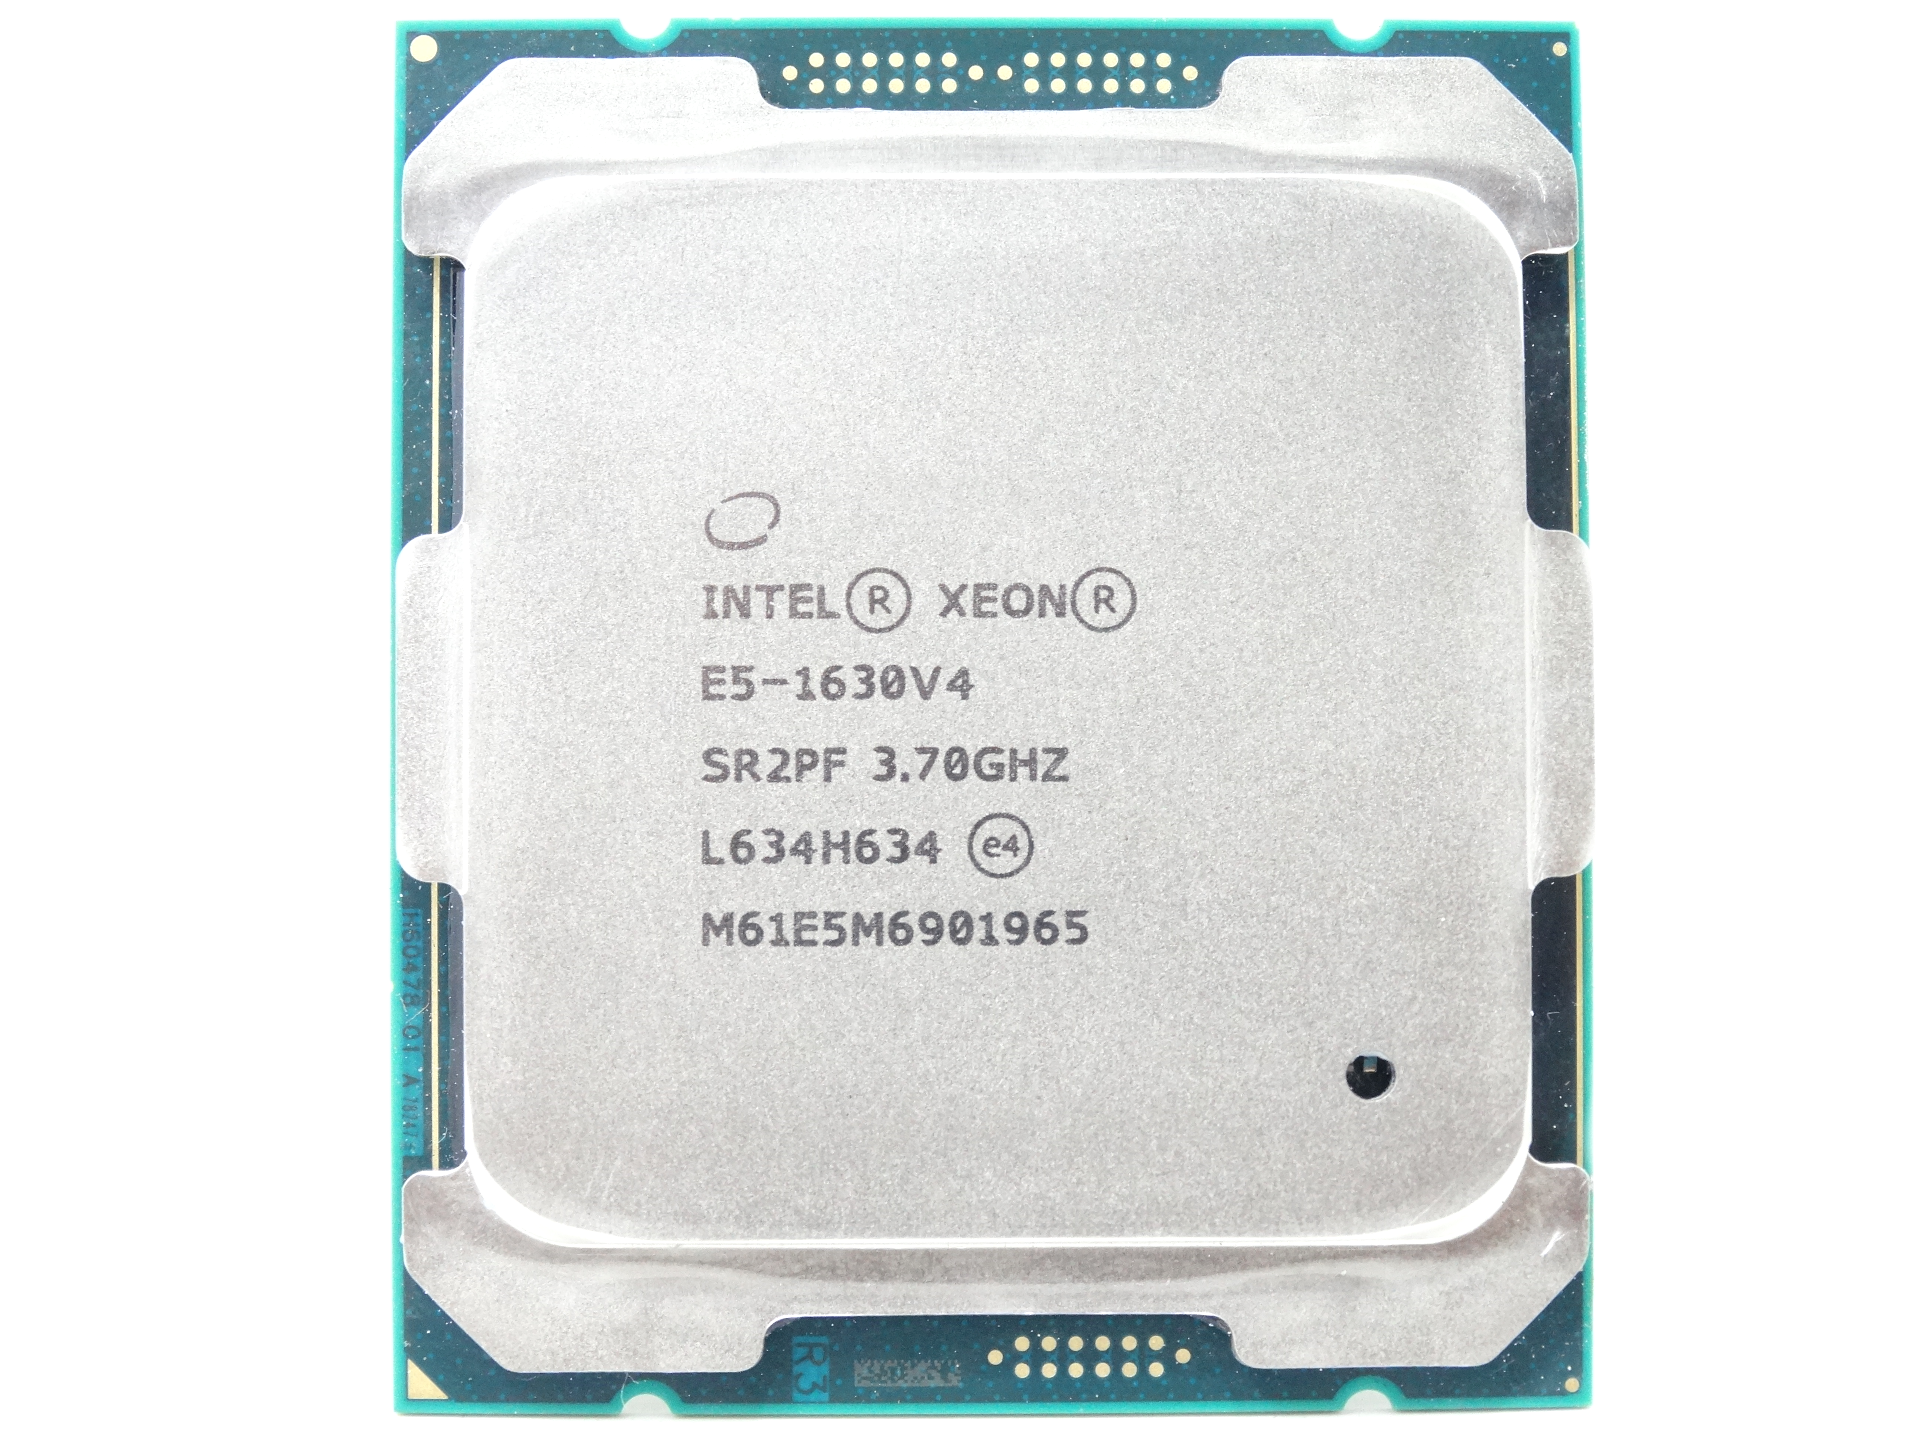 Intel Xeon E5-1630v4 Quad Core 3.70GHz 5GT/s LGA2011-3 CPU Processor (Intel E5-1630 v4)